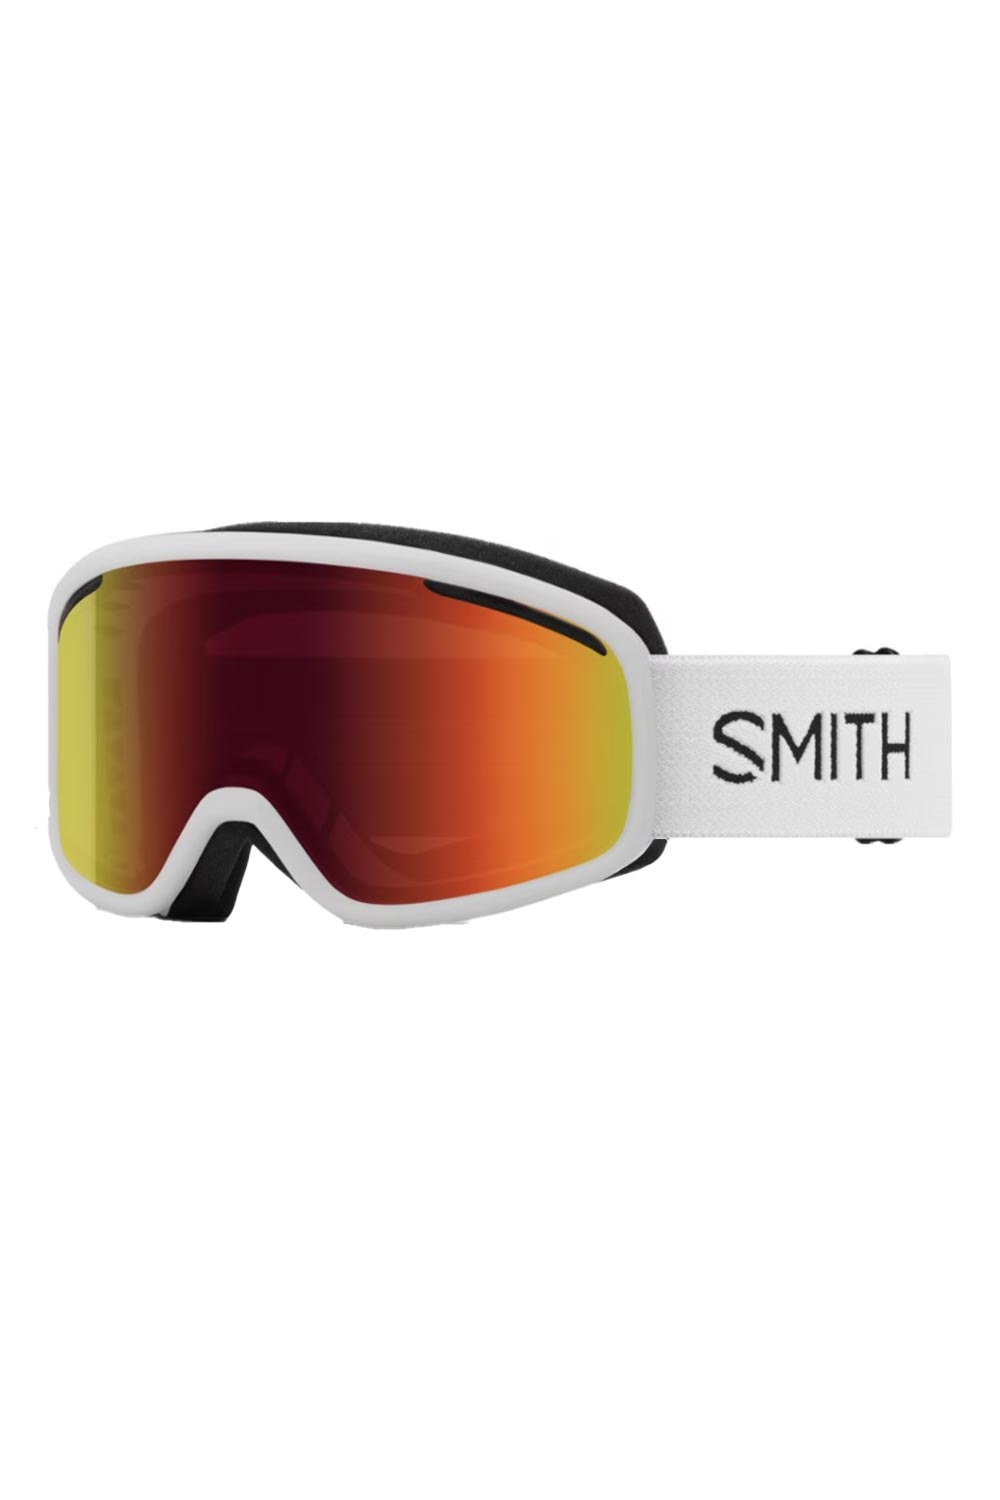 Smith ski/snowboard goggles, white strap red lens